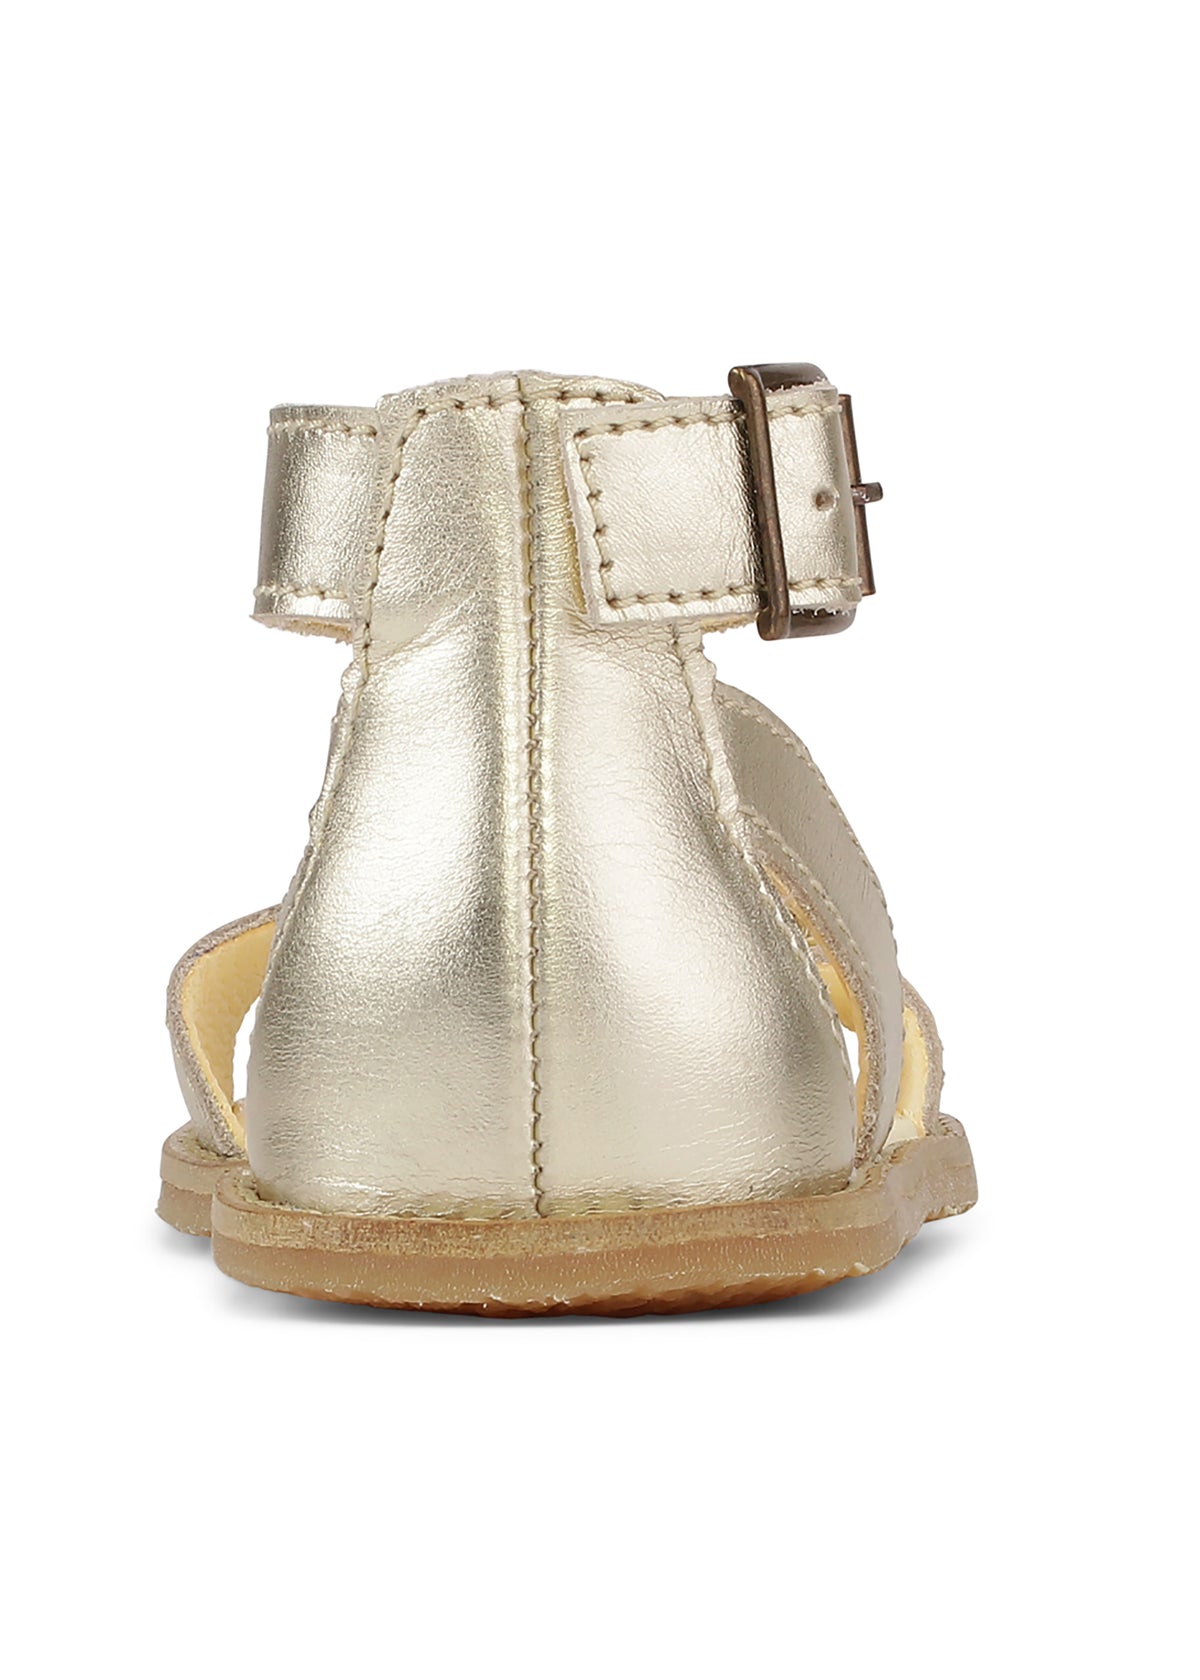 Children's sandals - Sheila, light gold, Bundgaard Zero Heel